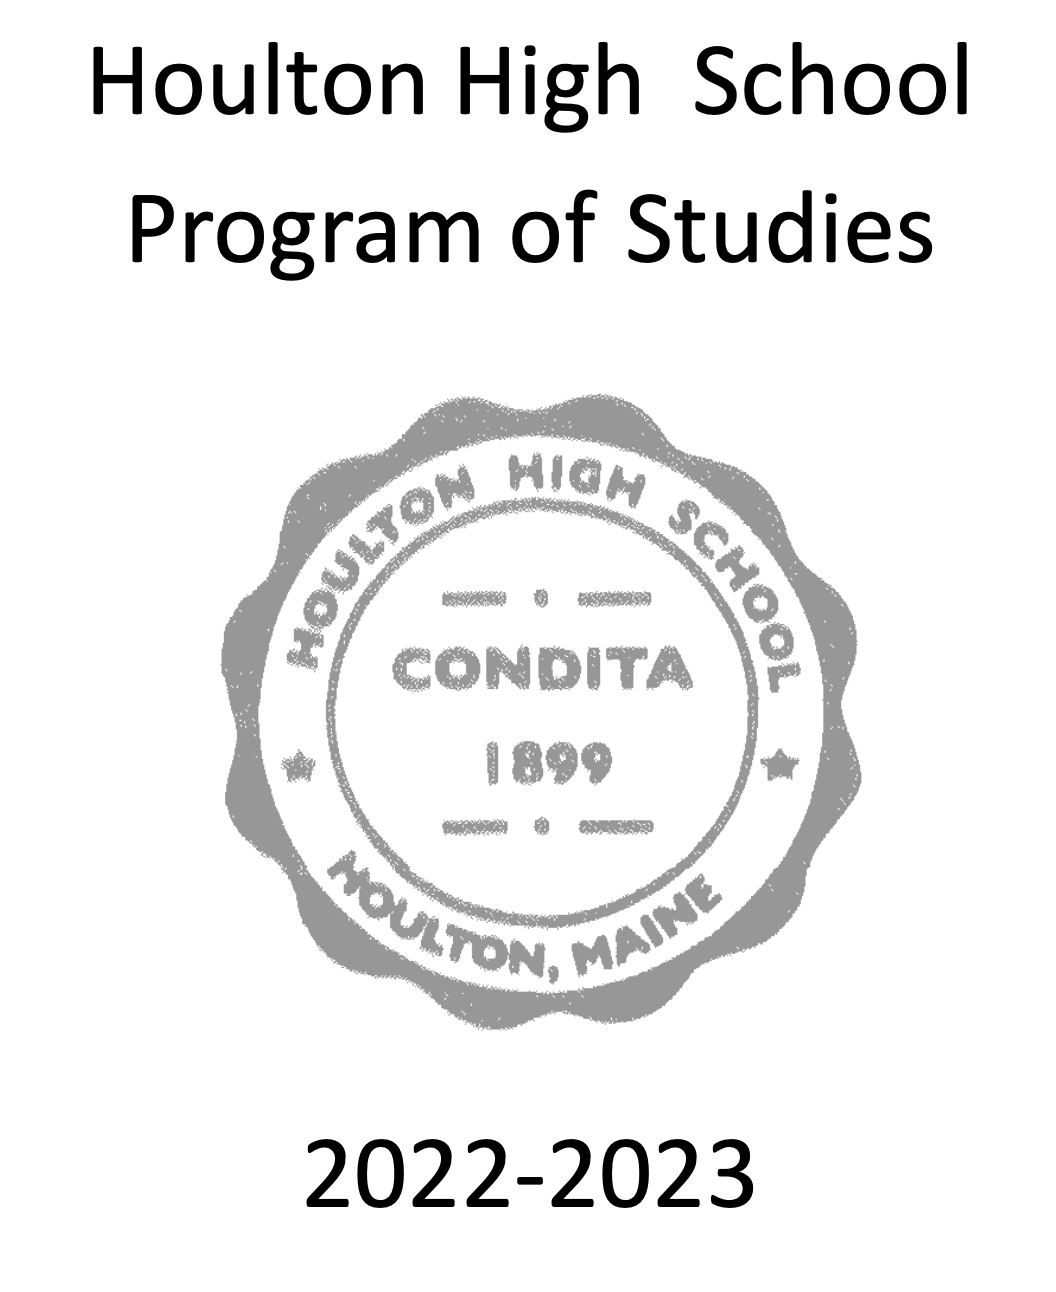 Program of Studies cover